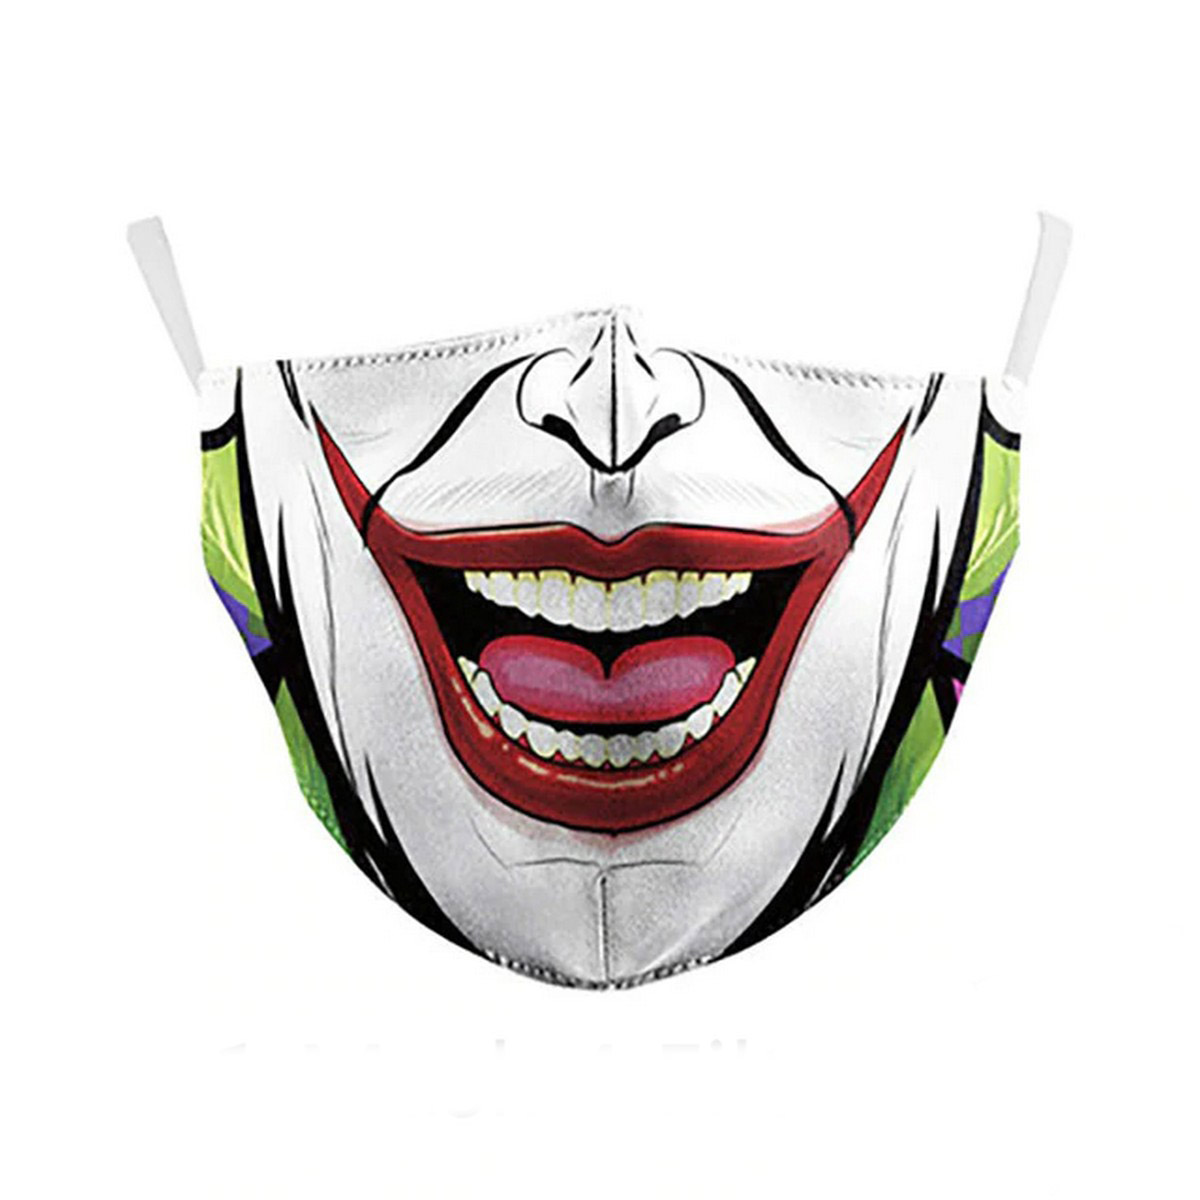 schaamte hoofdstad vrije tijd JOKER protective face mask - 100% polyester | Cool Mania